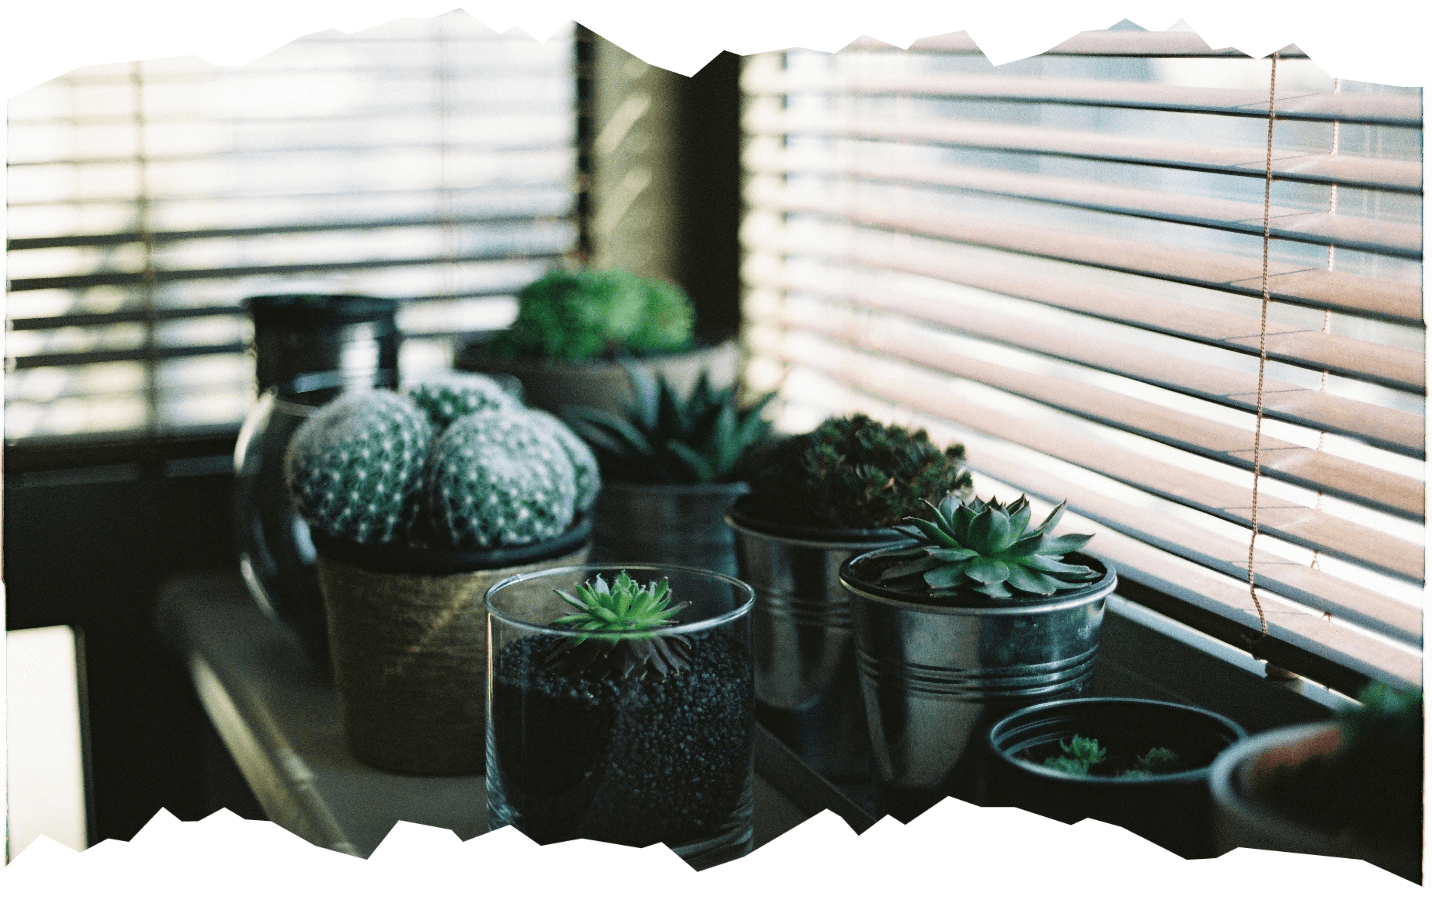 window plants